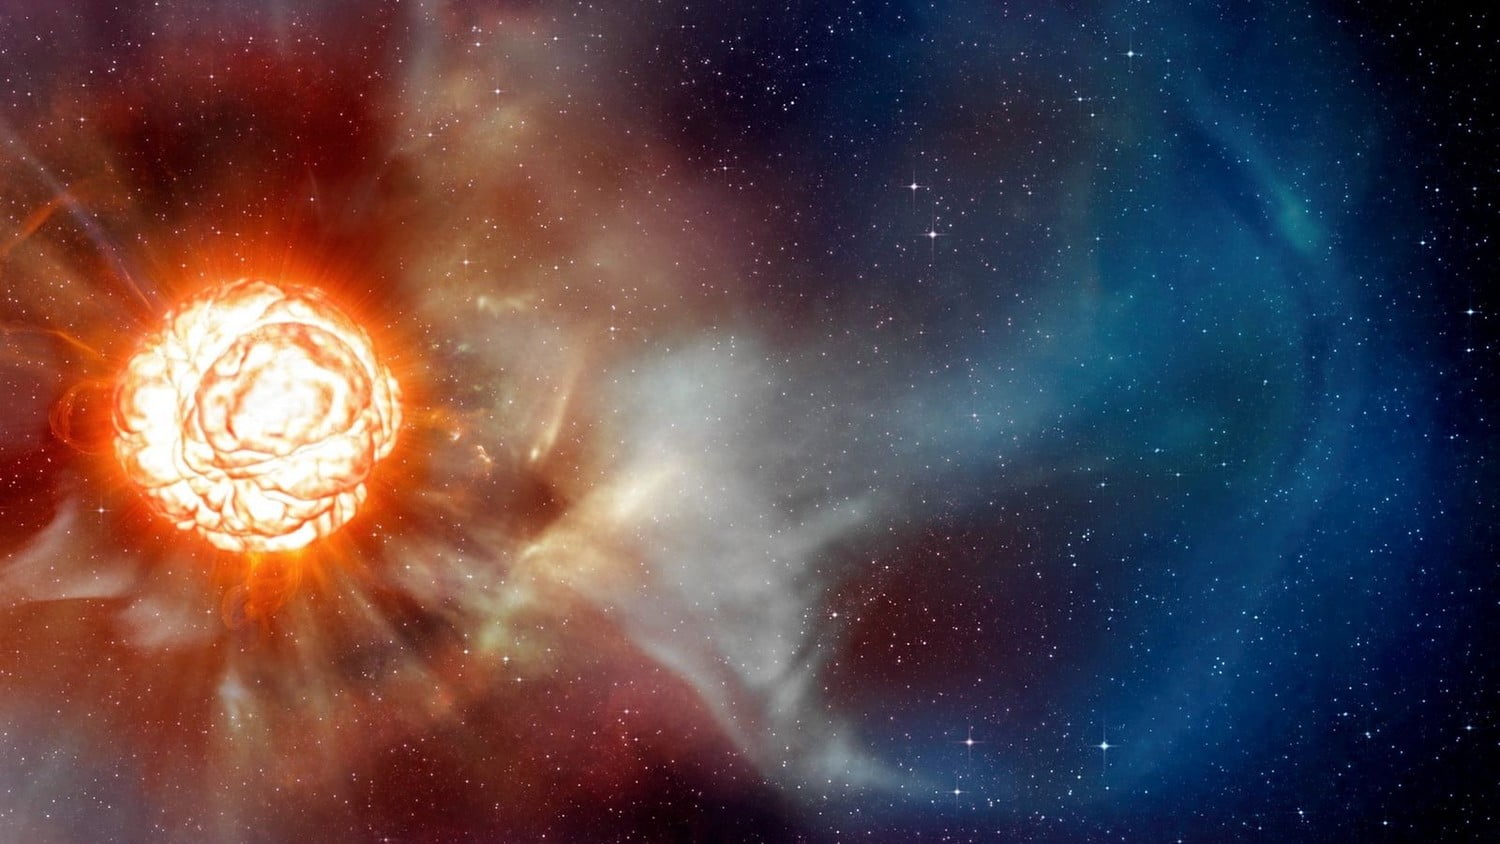 Betelgeuse star prepares to go supernova